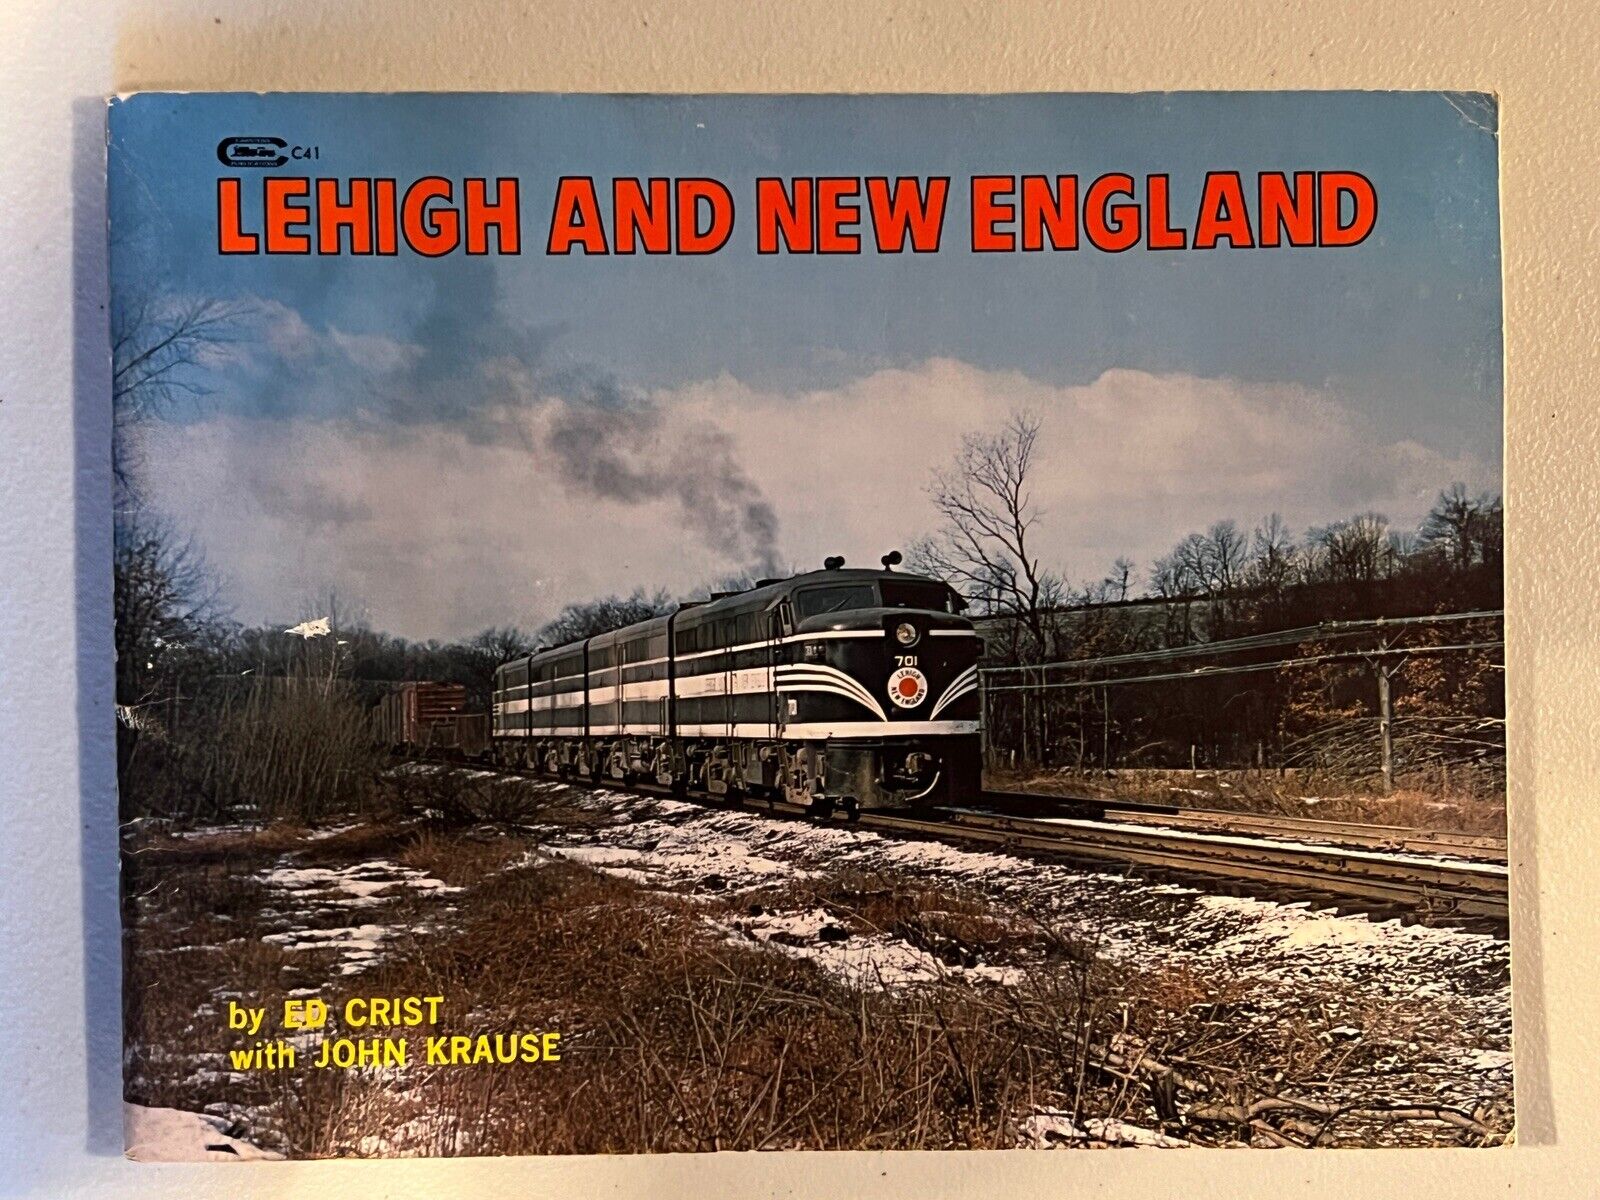 Lehigh and New England - Ed Crist & John Krause (Railroad Book) MDV